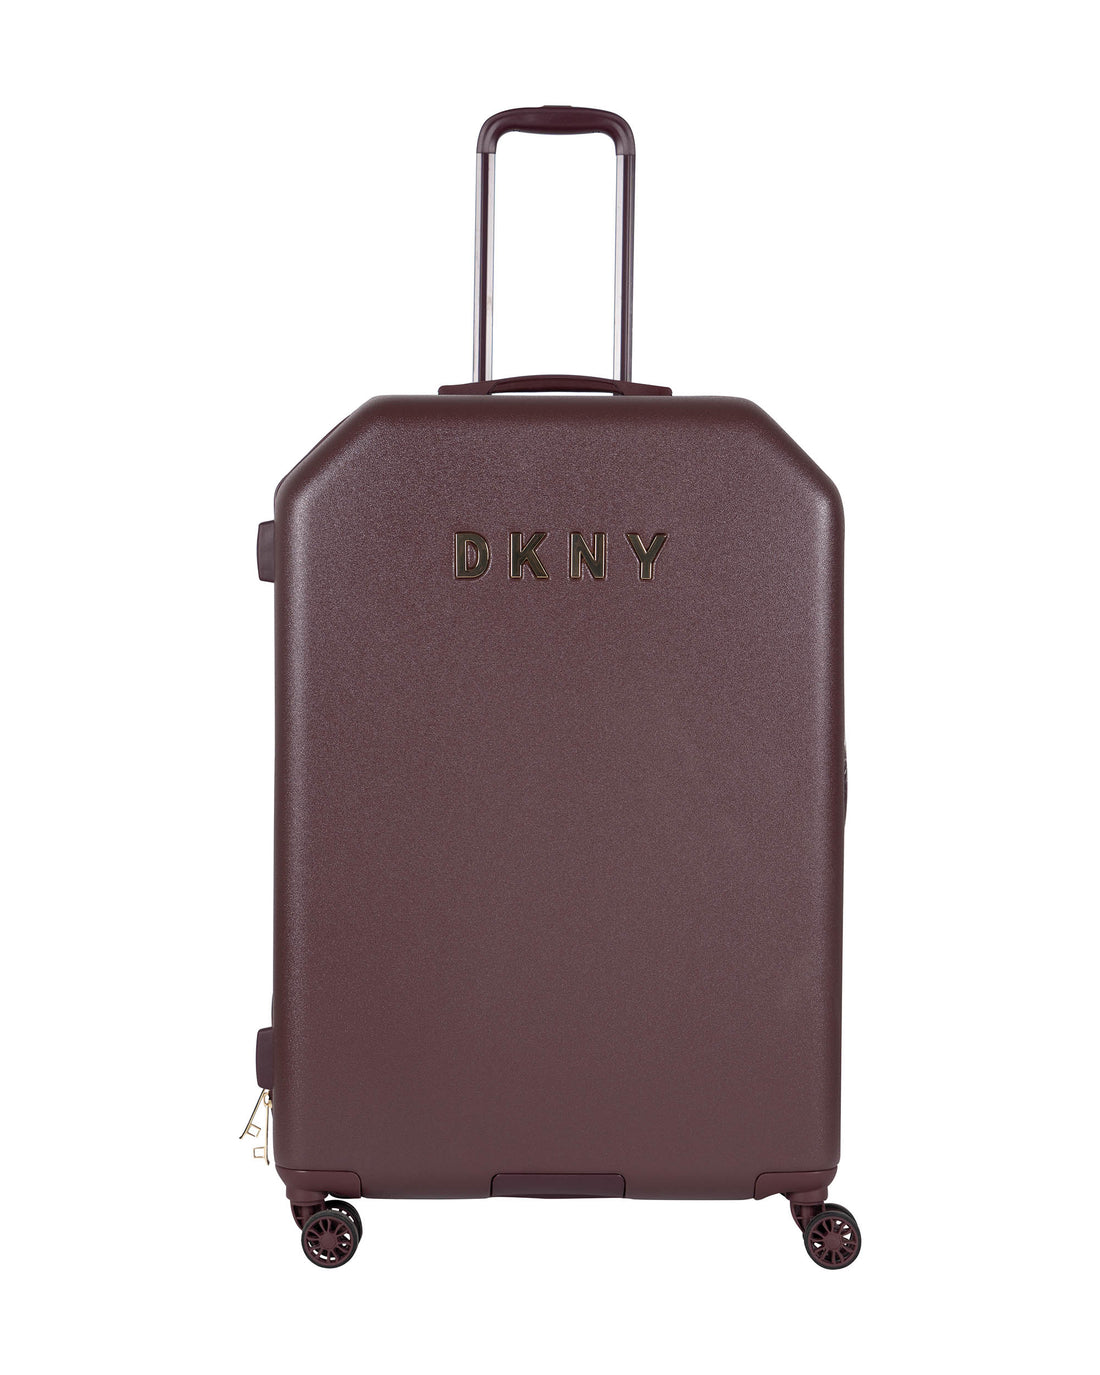 DKNY حقيبة سفر كبيرة حمراء